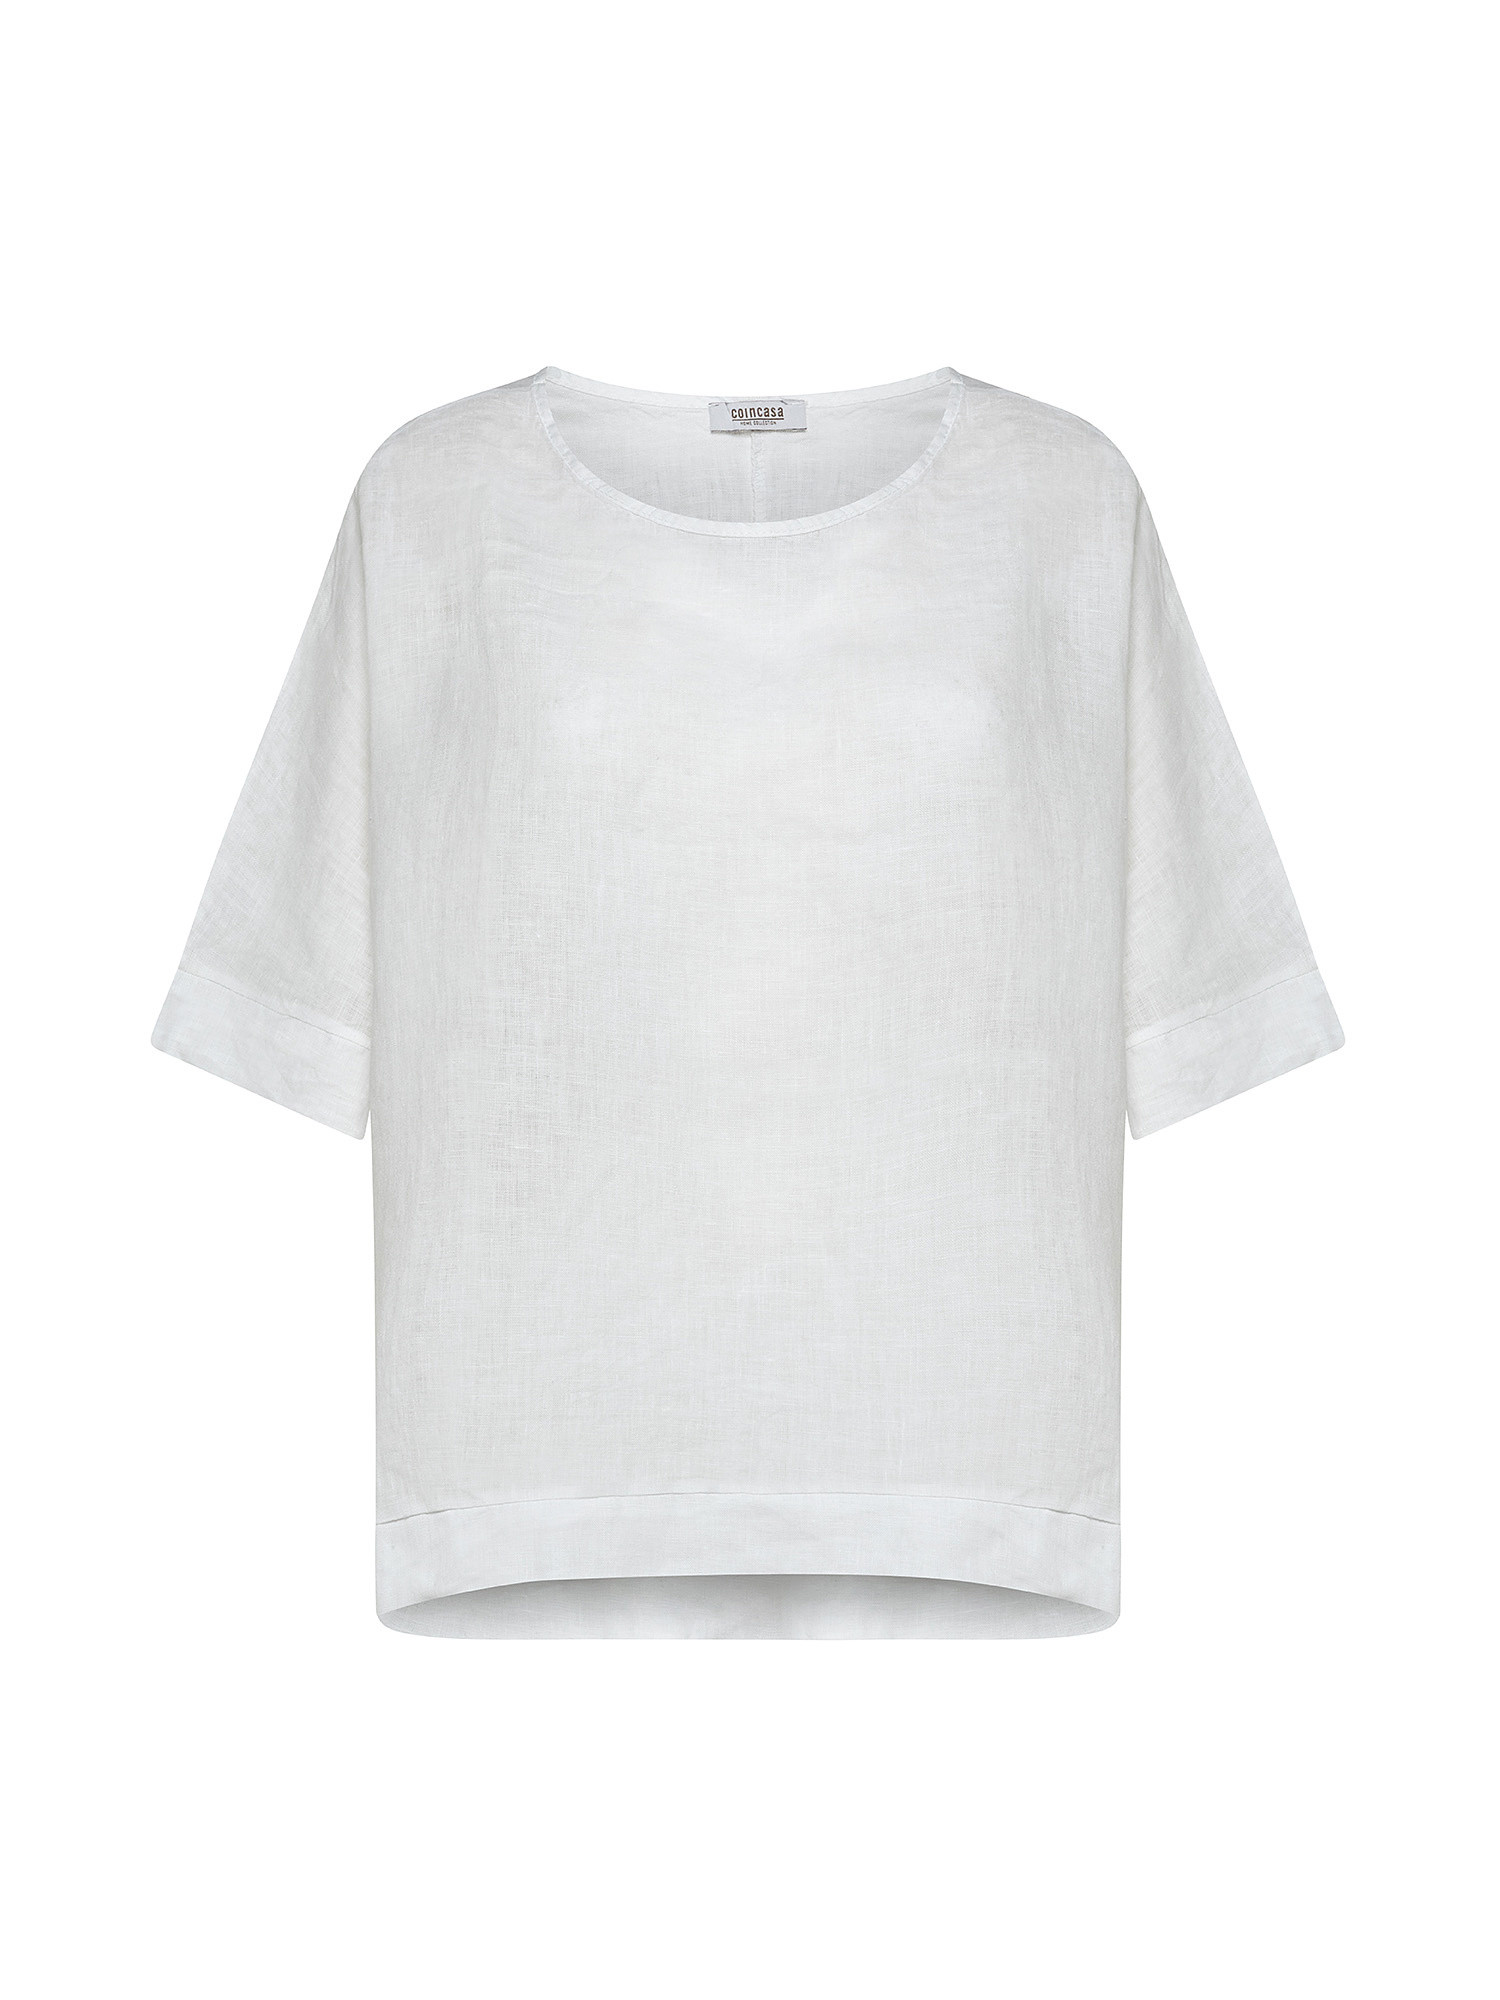 Camicia over puro lino tinta unita, Bianco, large image number 0